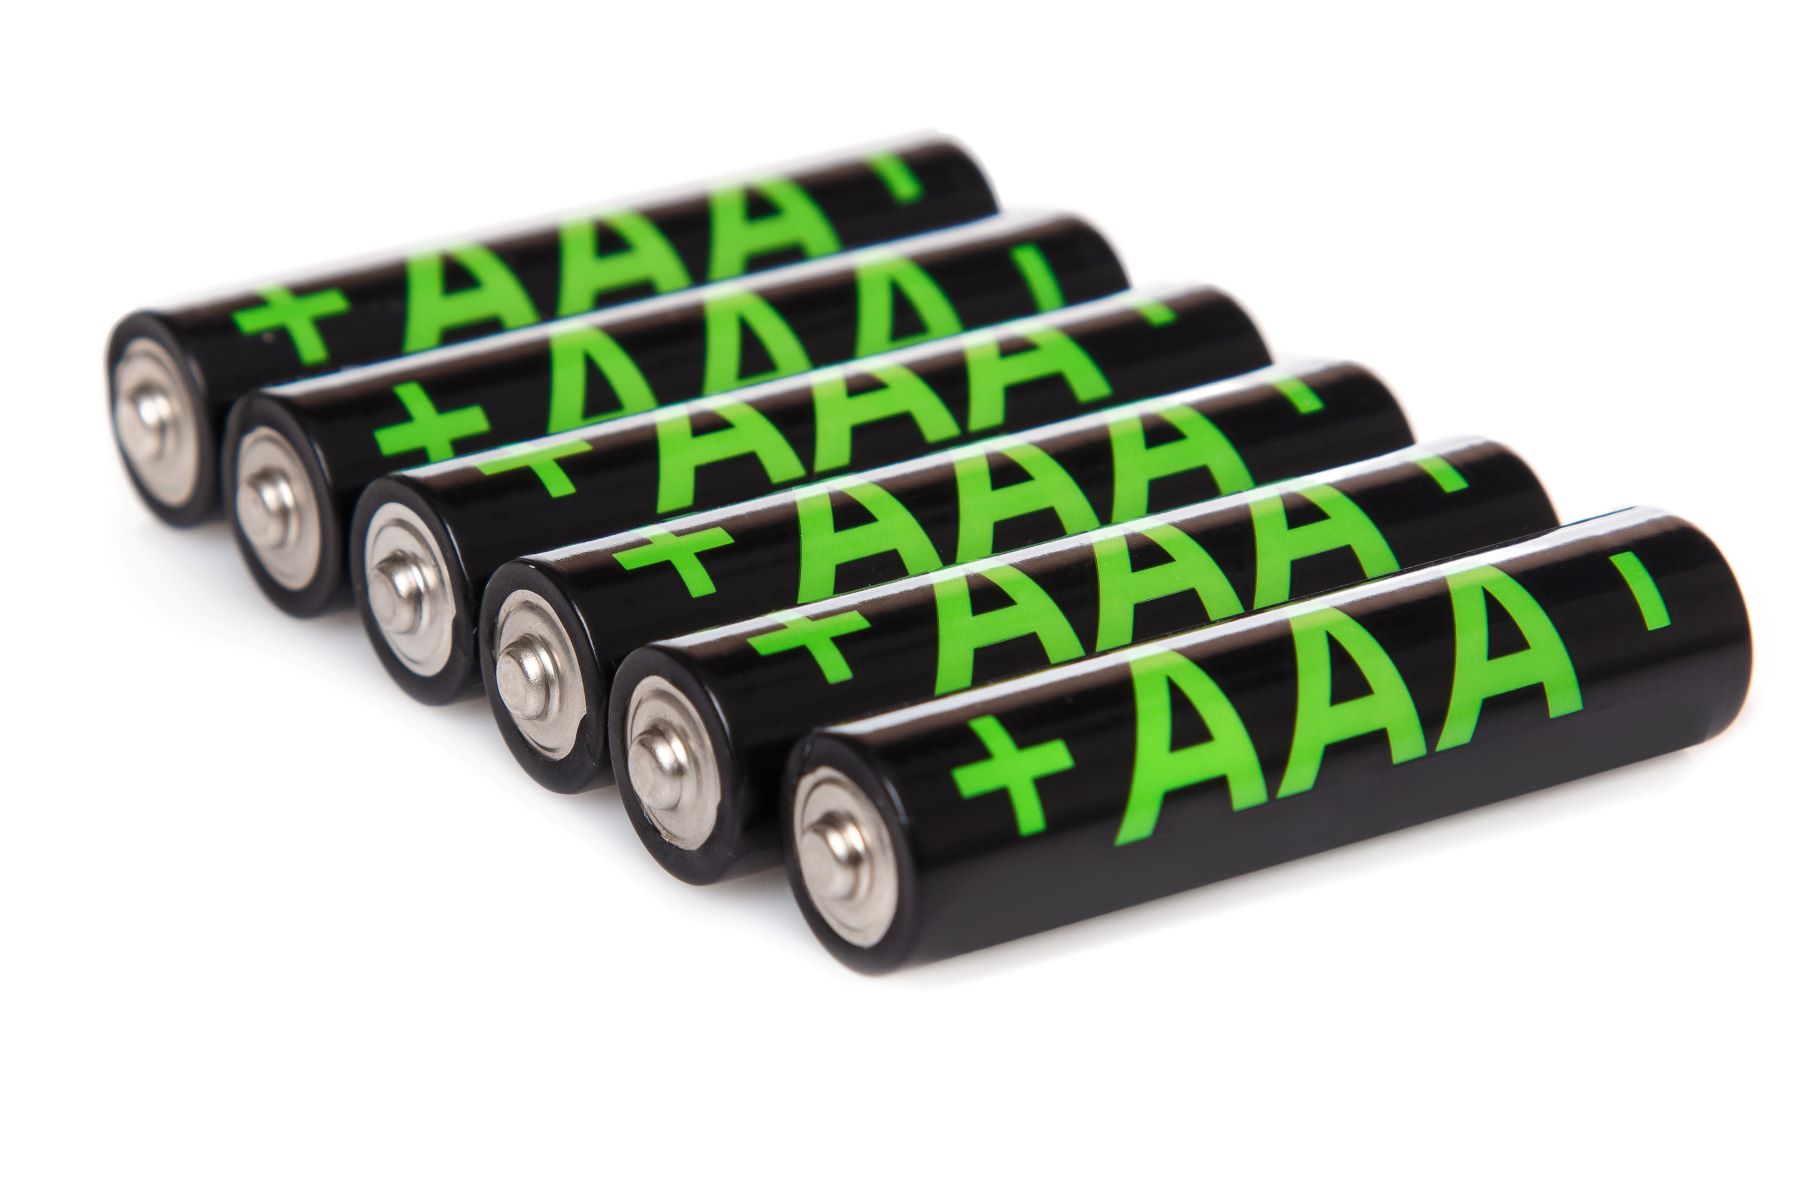 LR06 AAA Pile / accu / batterie Varta